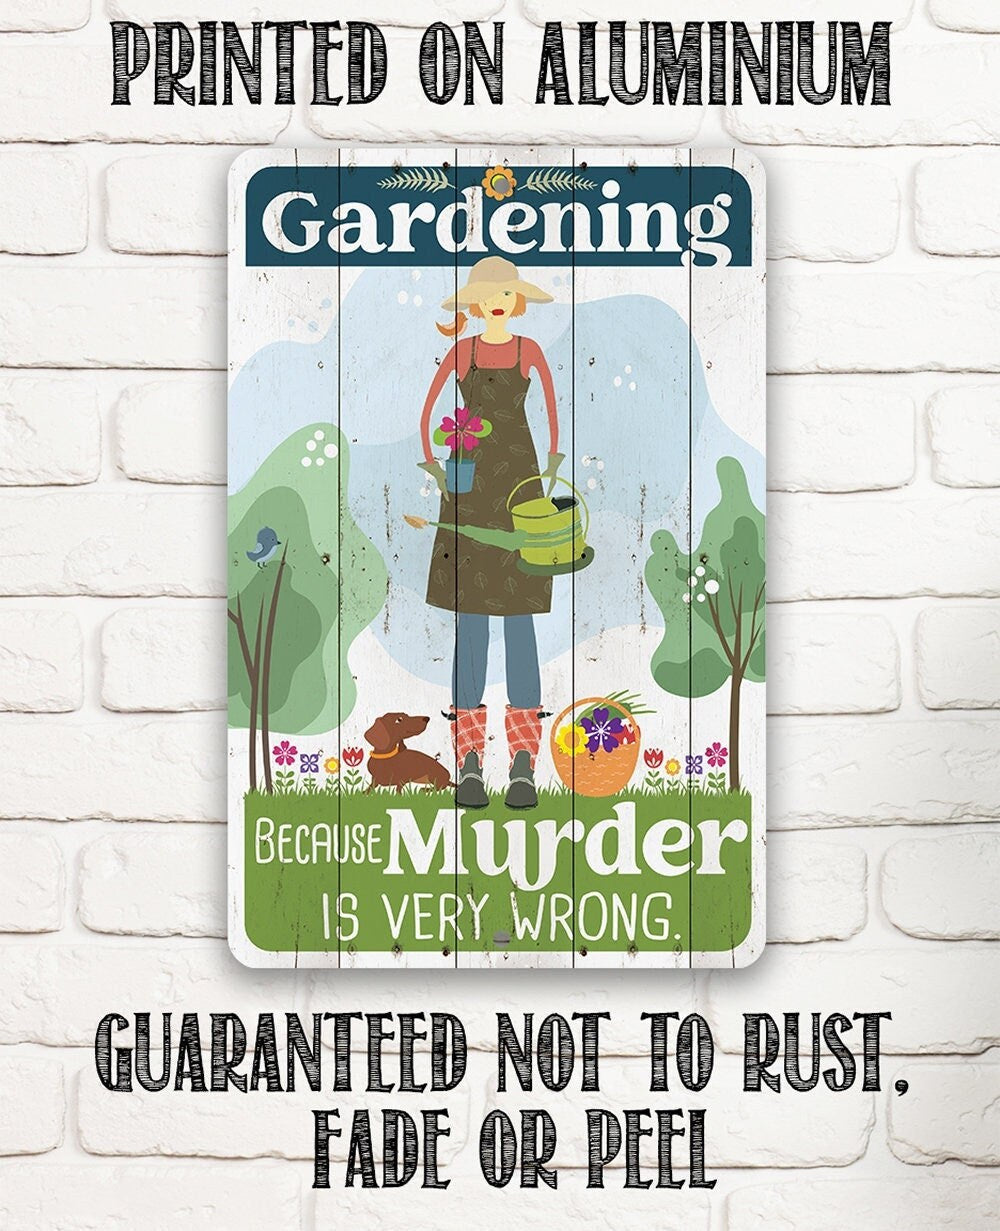 Gardening Because Murder is Very Wrong - Metal Sign Metal Sign Lone Star Art 